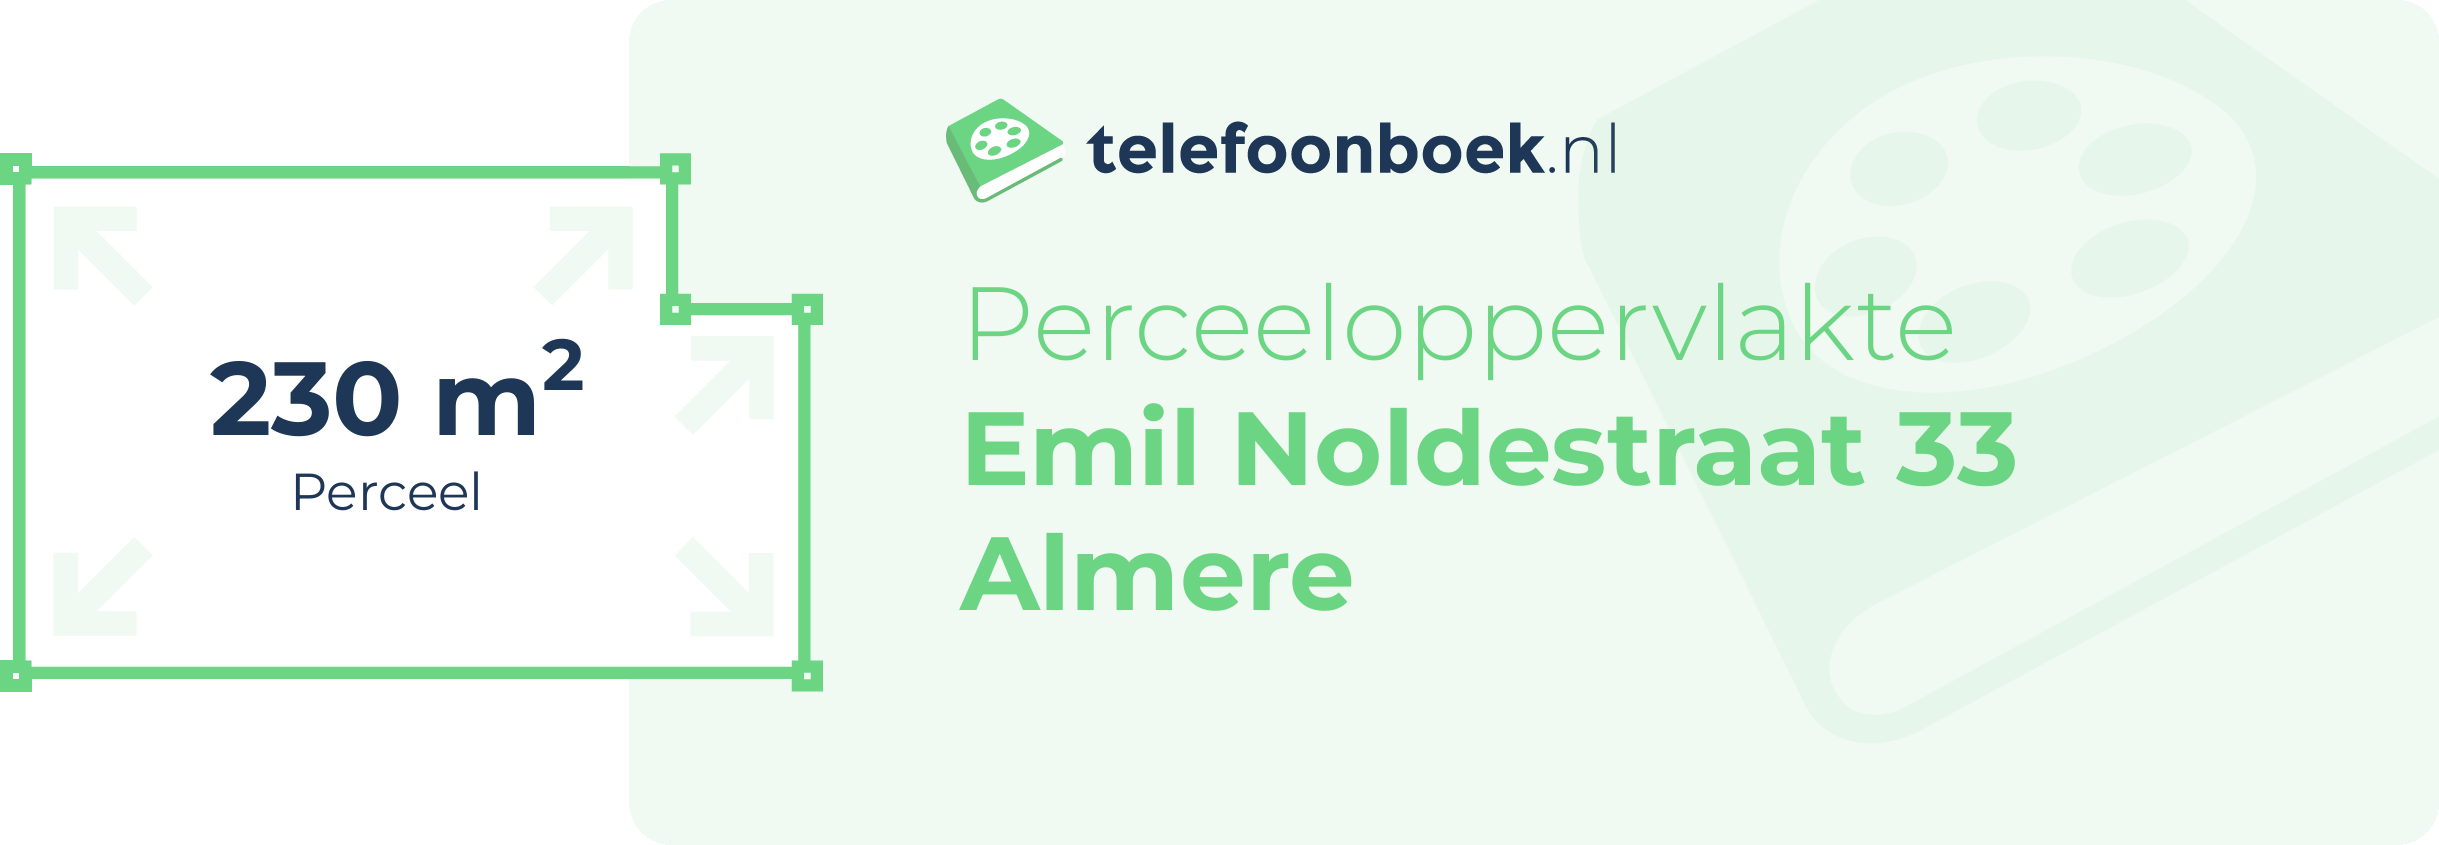 Perceeloppervlakte Emil Noldestraat 33 Almere